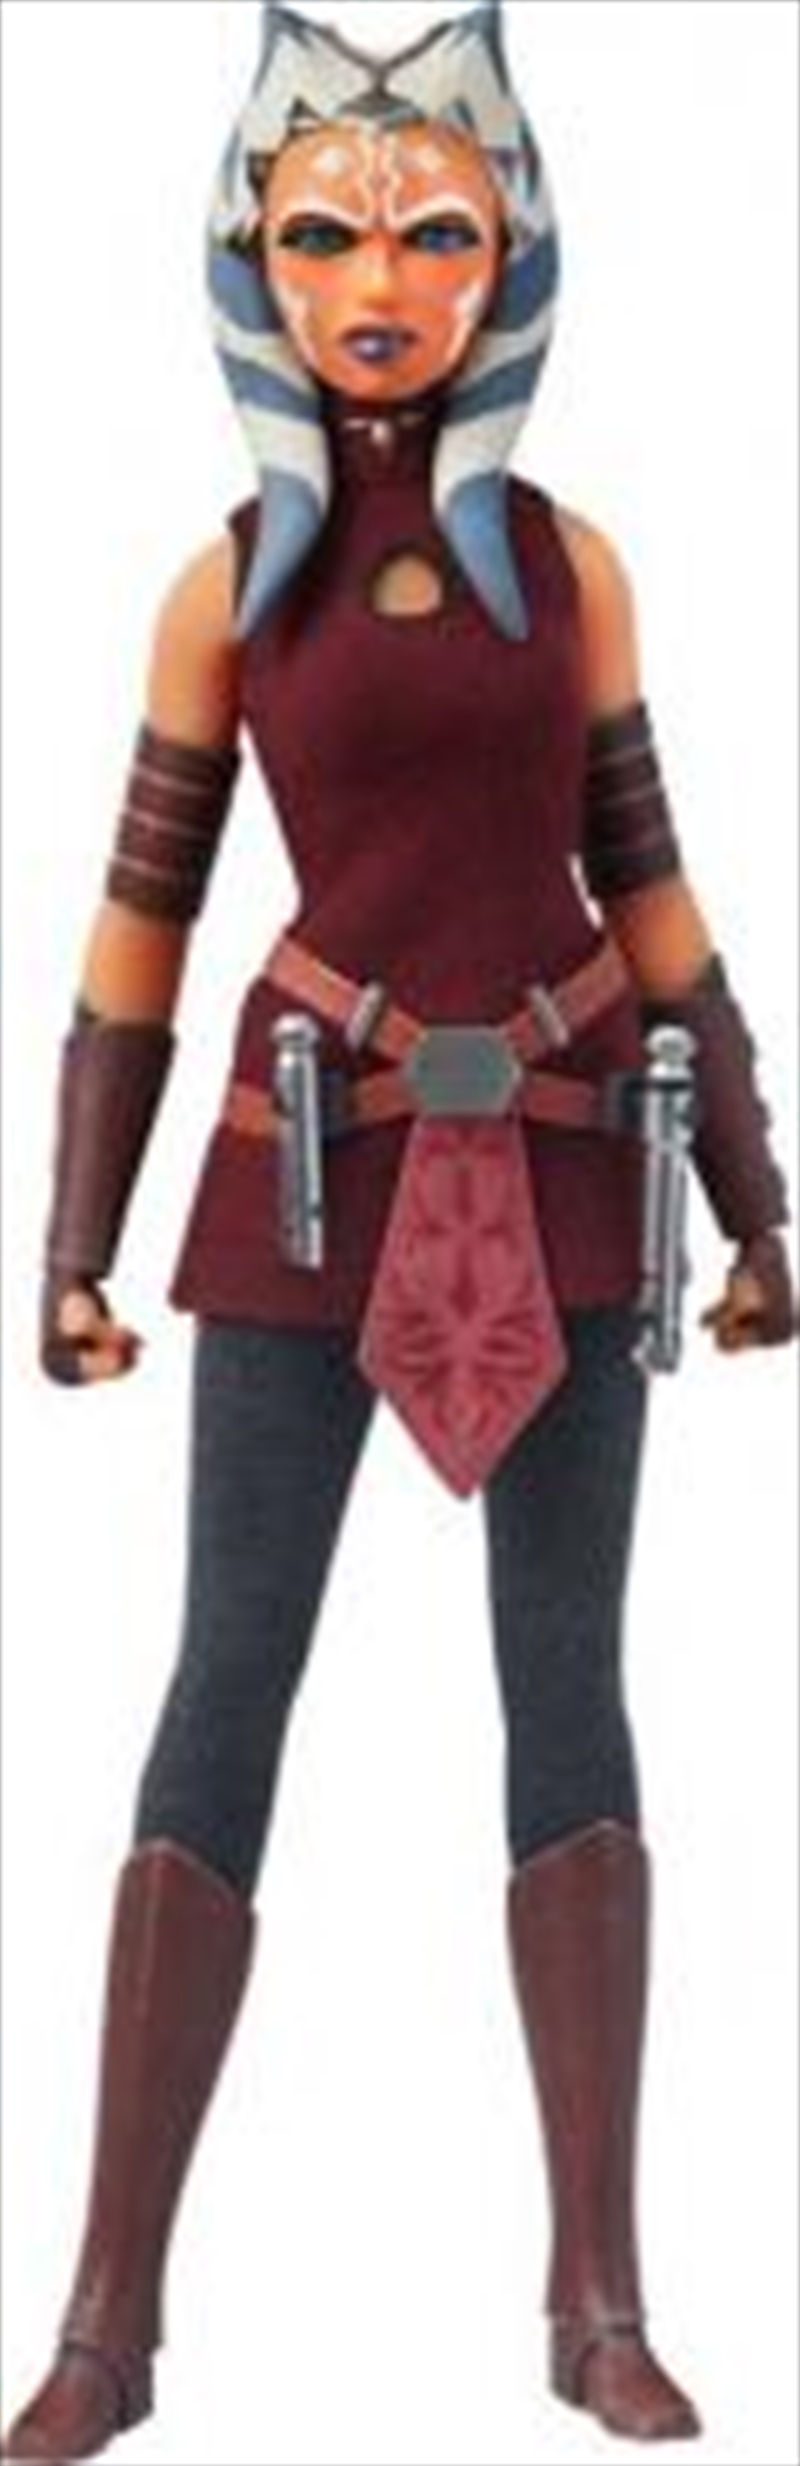 Star Wars: The Clone Wars - Ahsoka Tano 1:6 Scale Action Figure/Product Detail/Figurines